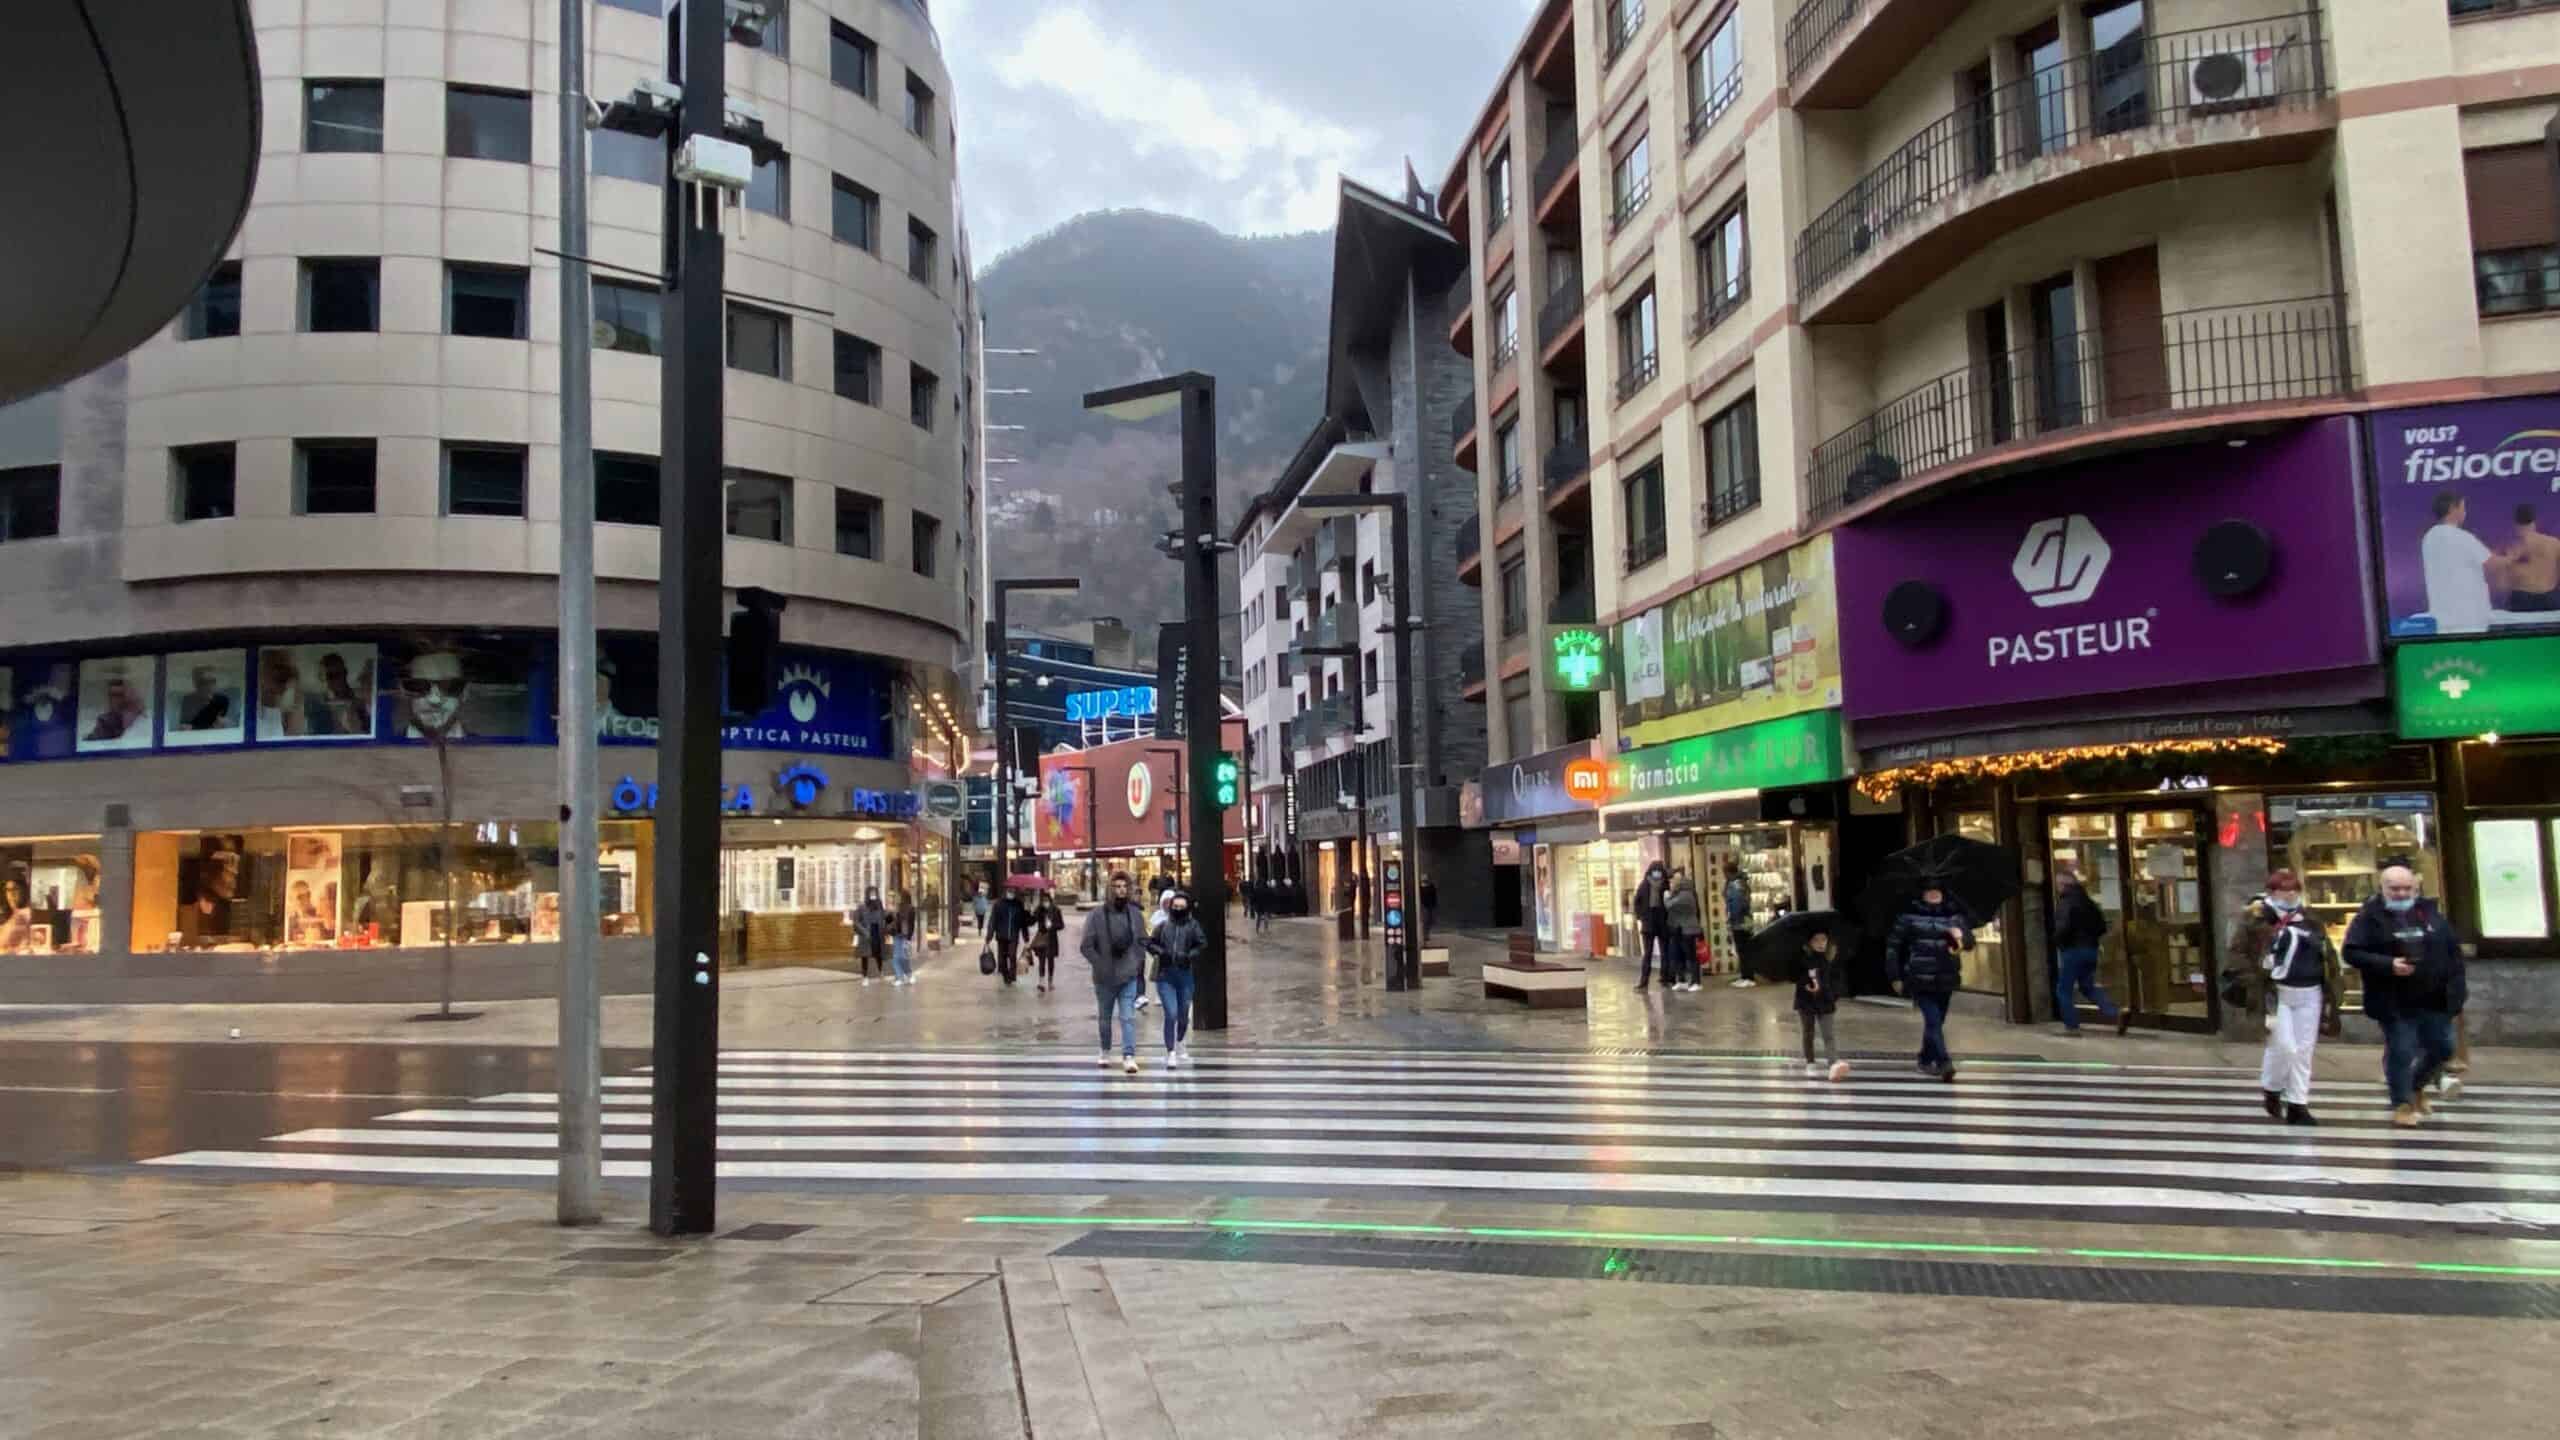 The shopping area of Andorra